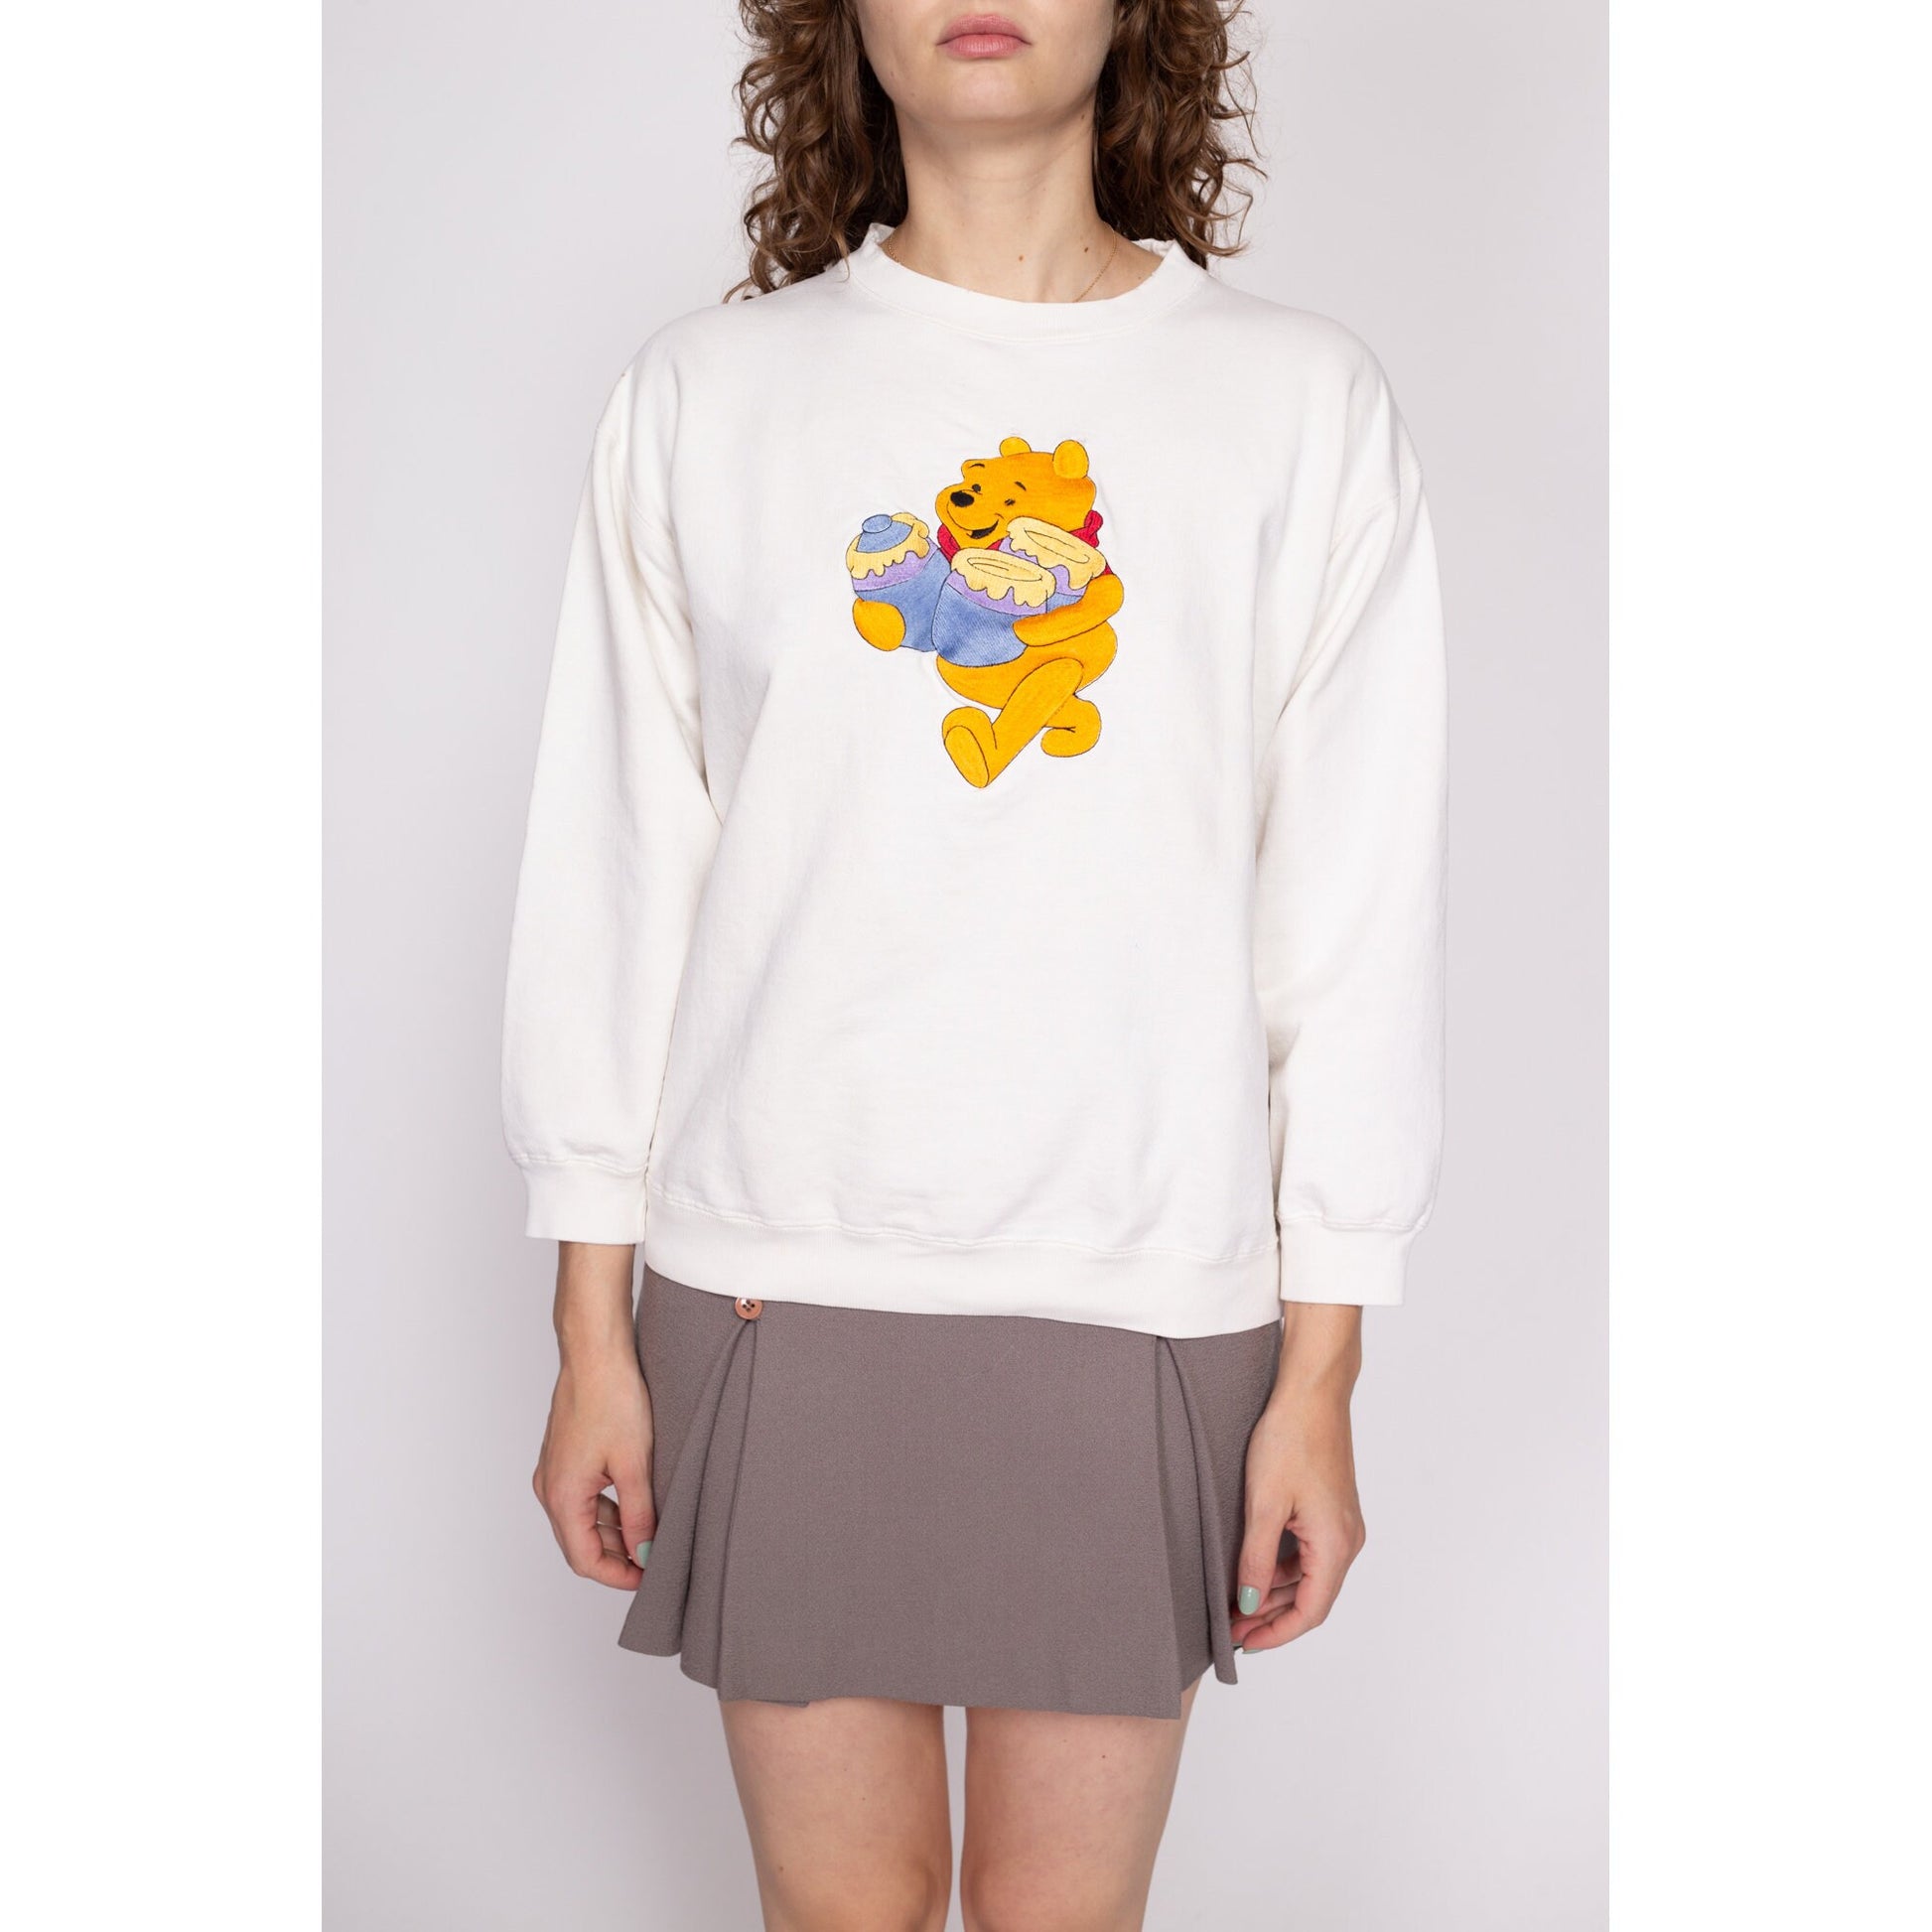 L| 90s Winnie The Pooh Sweatshirt - Large | Vintage White Disney Cartoon Embroidered Graphic Crewneck